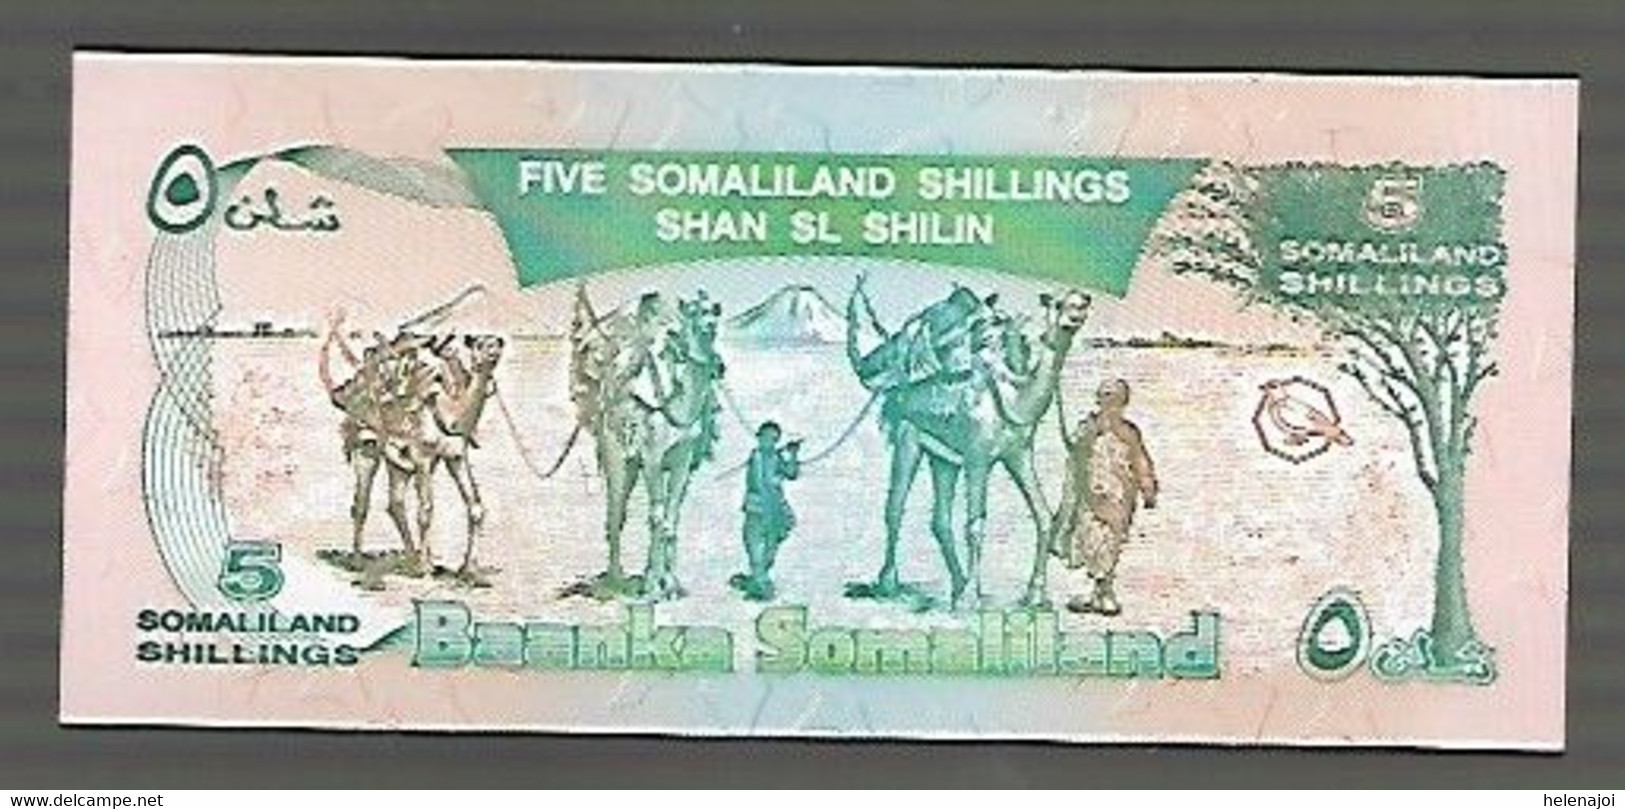 Somalie - Somalia